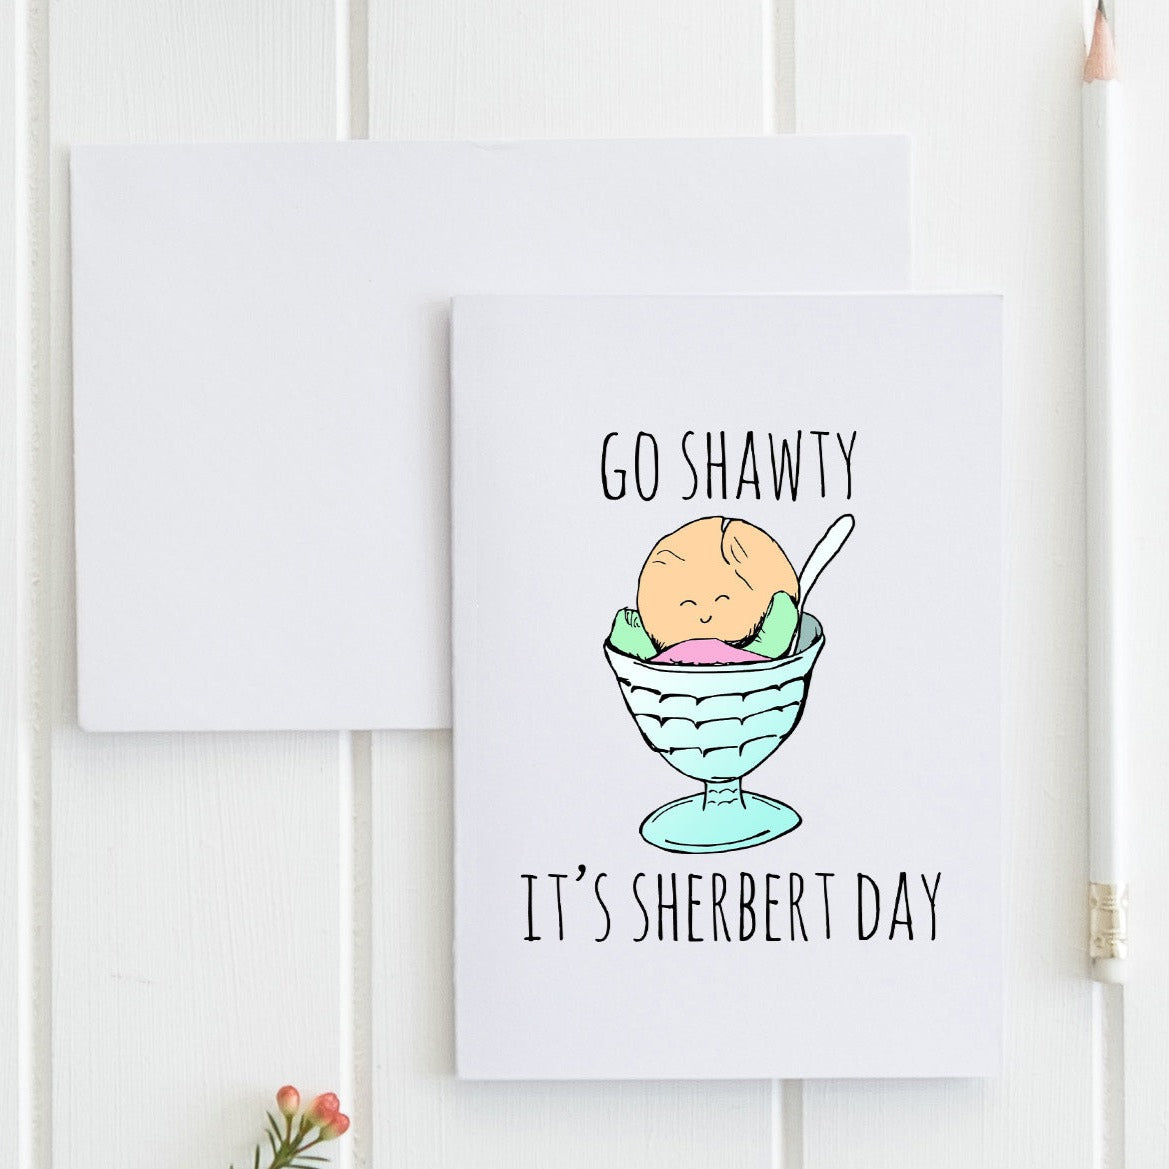 Go Shawty It's Sherbert Day - Greeting Card